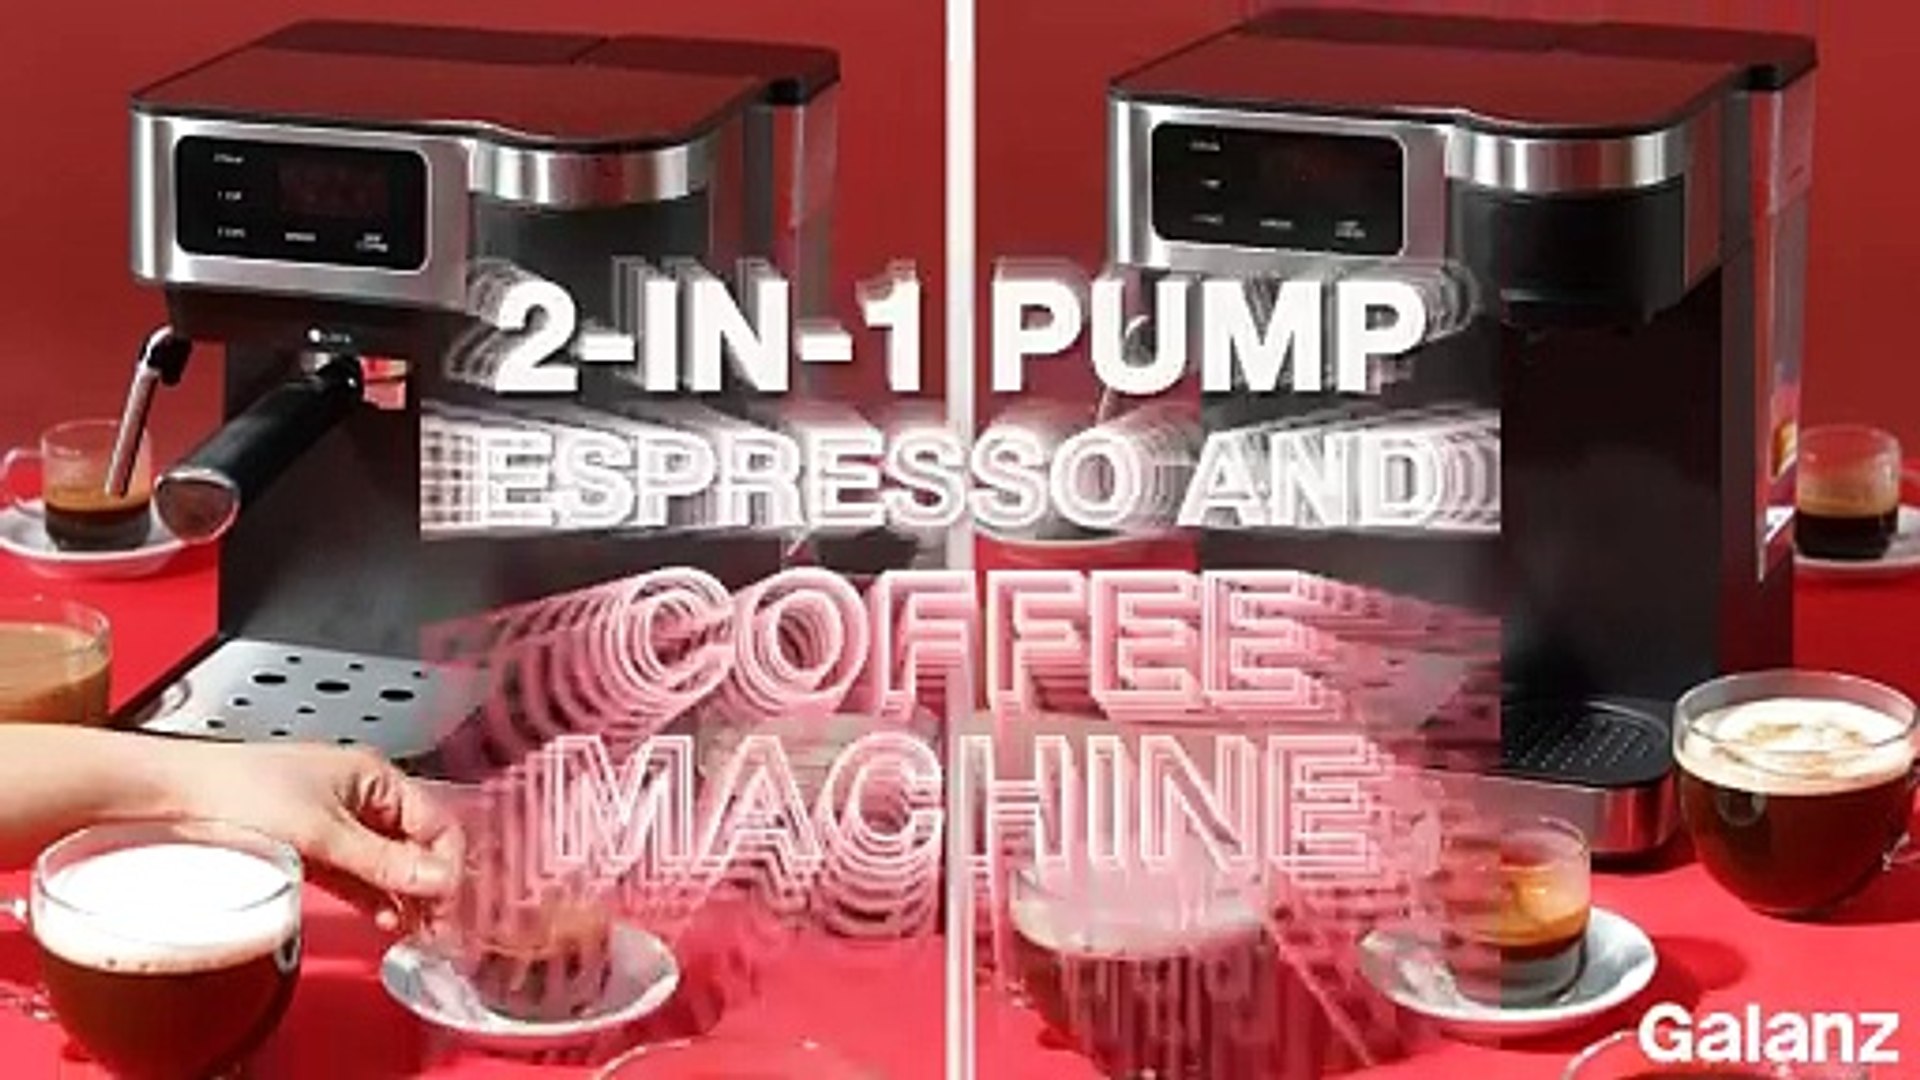 Galanz 2-in-1 Pump Espresso Machine & Single Serve Coffee Maker